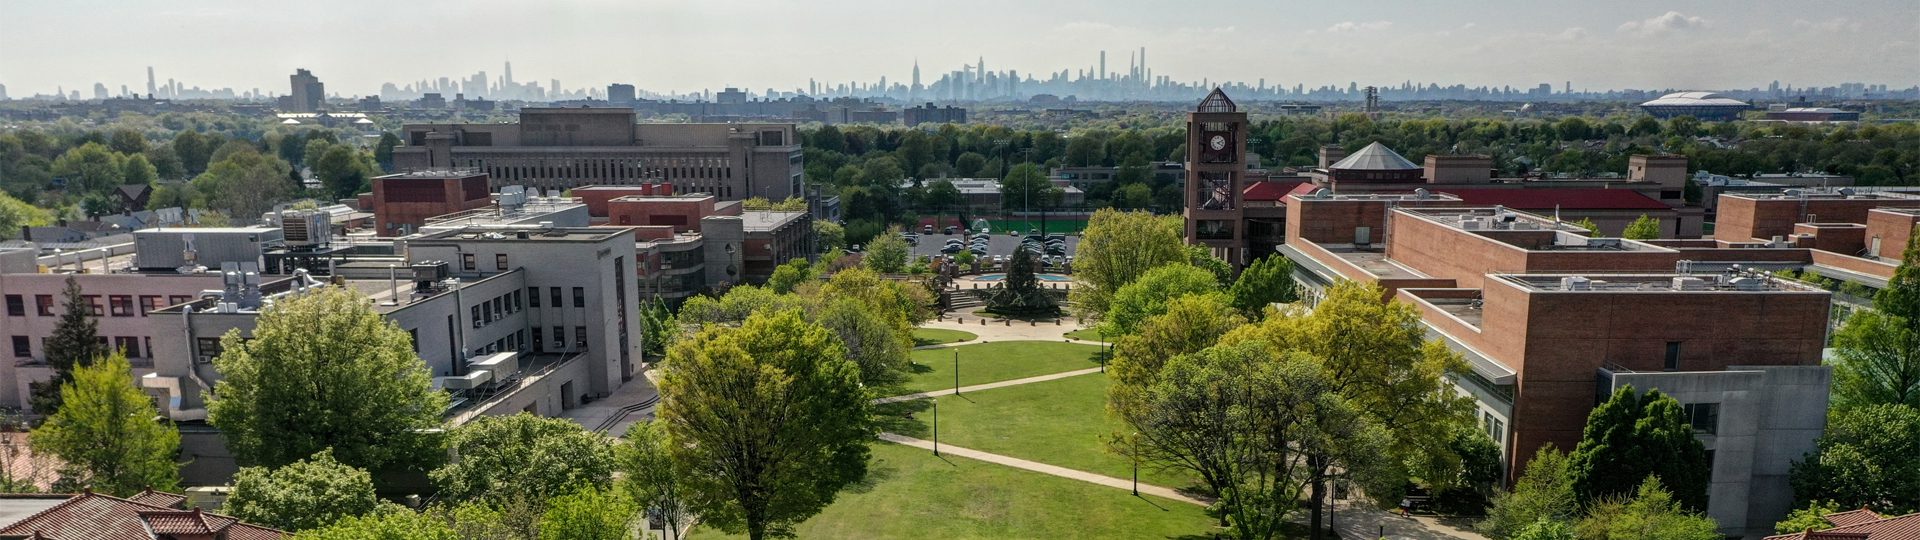 Aerial View of Queens College campus.